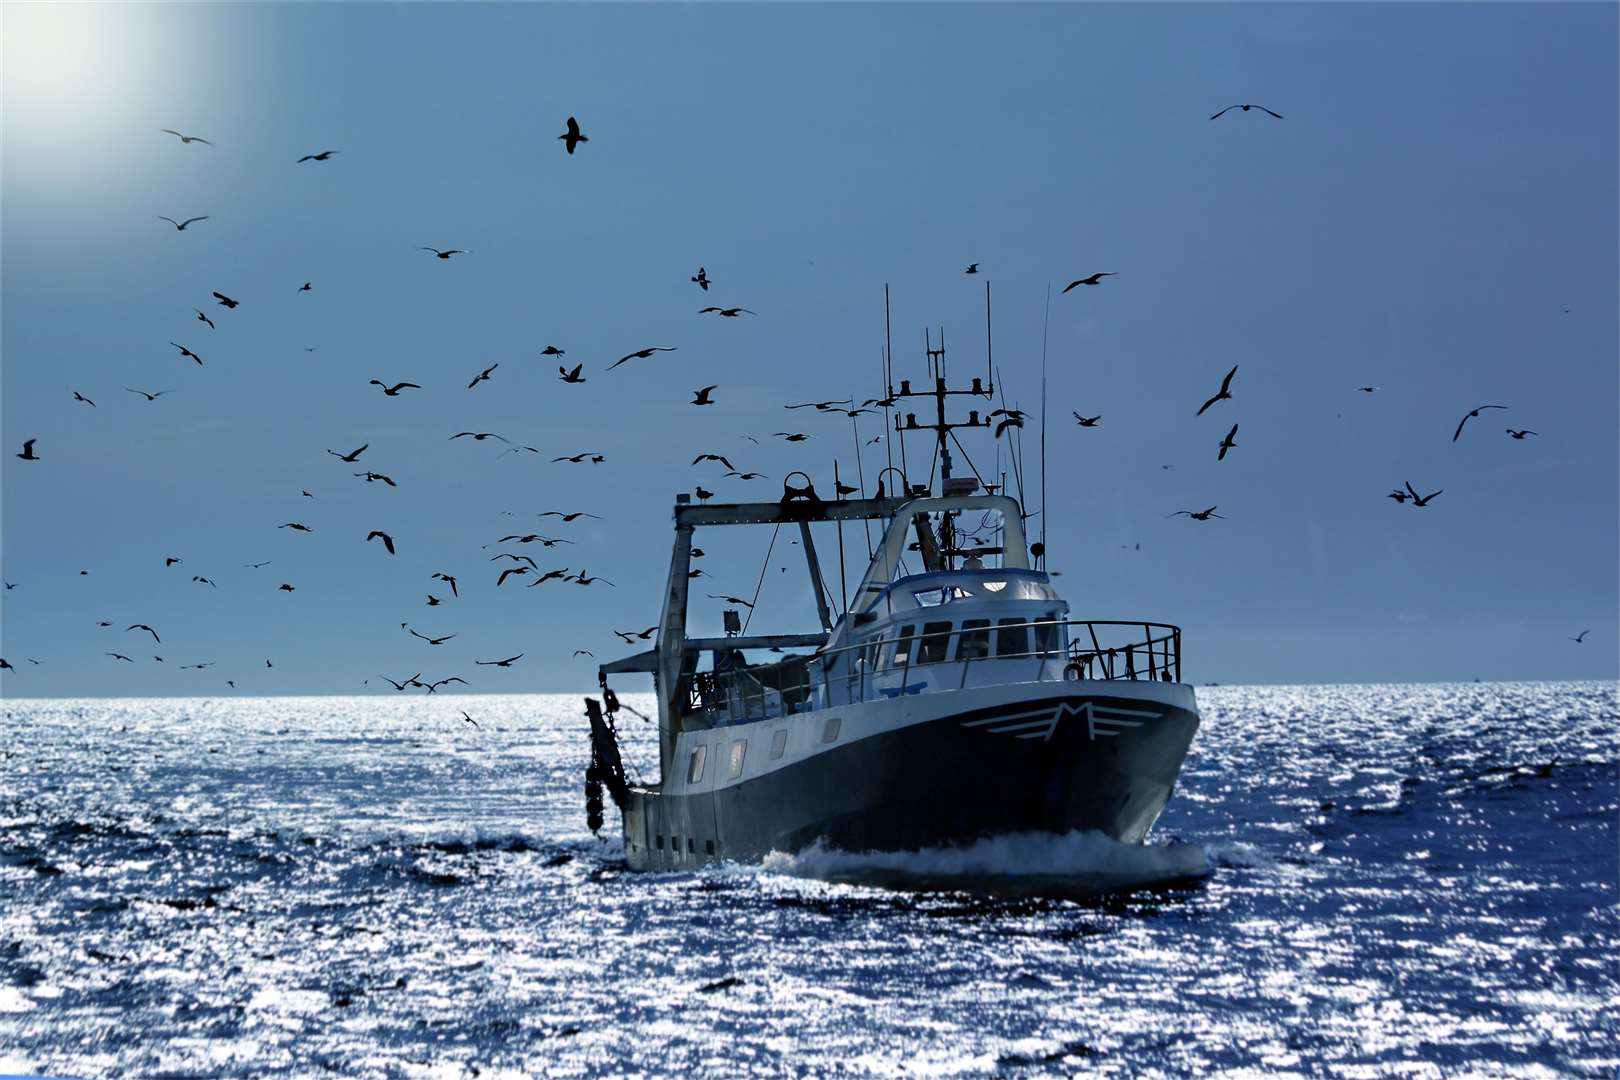 The Marine Management Organisation publishes statistics on fish landings in Scotland.